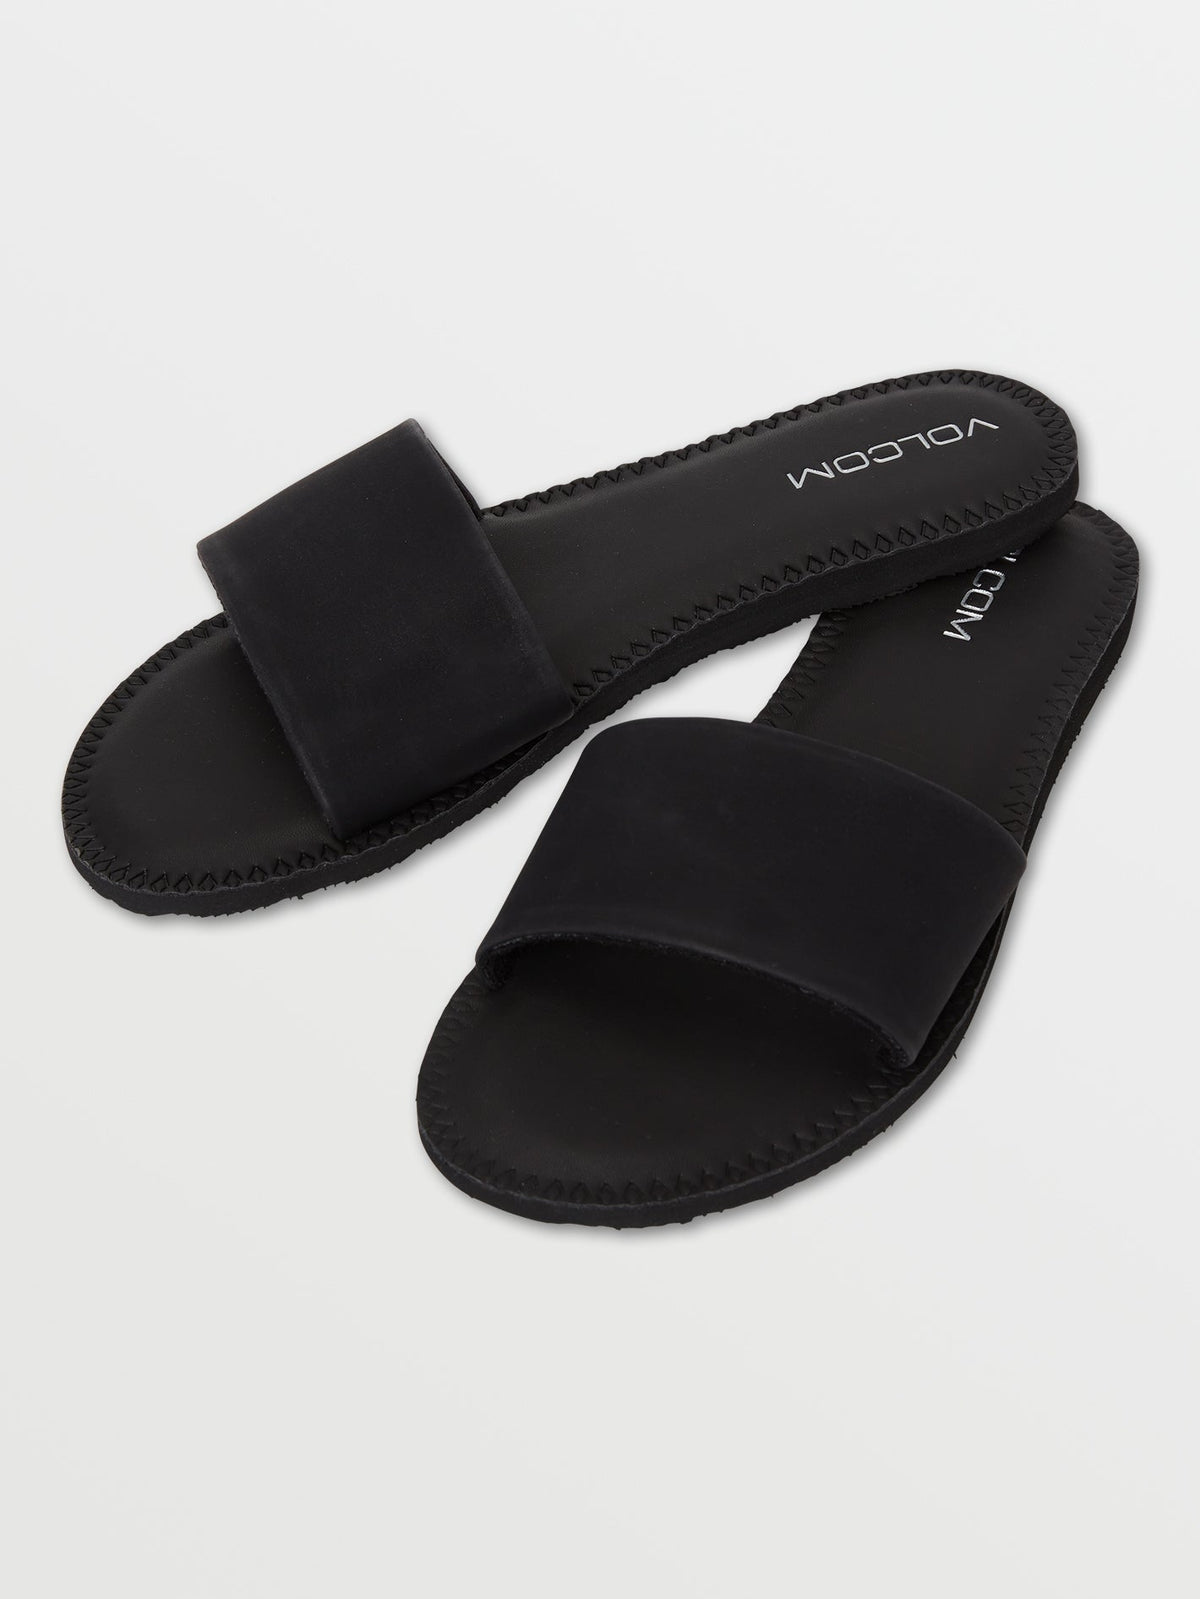 Volcom Simple Slide Women's Sandals Black Out